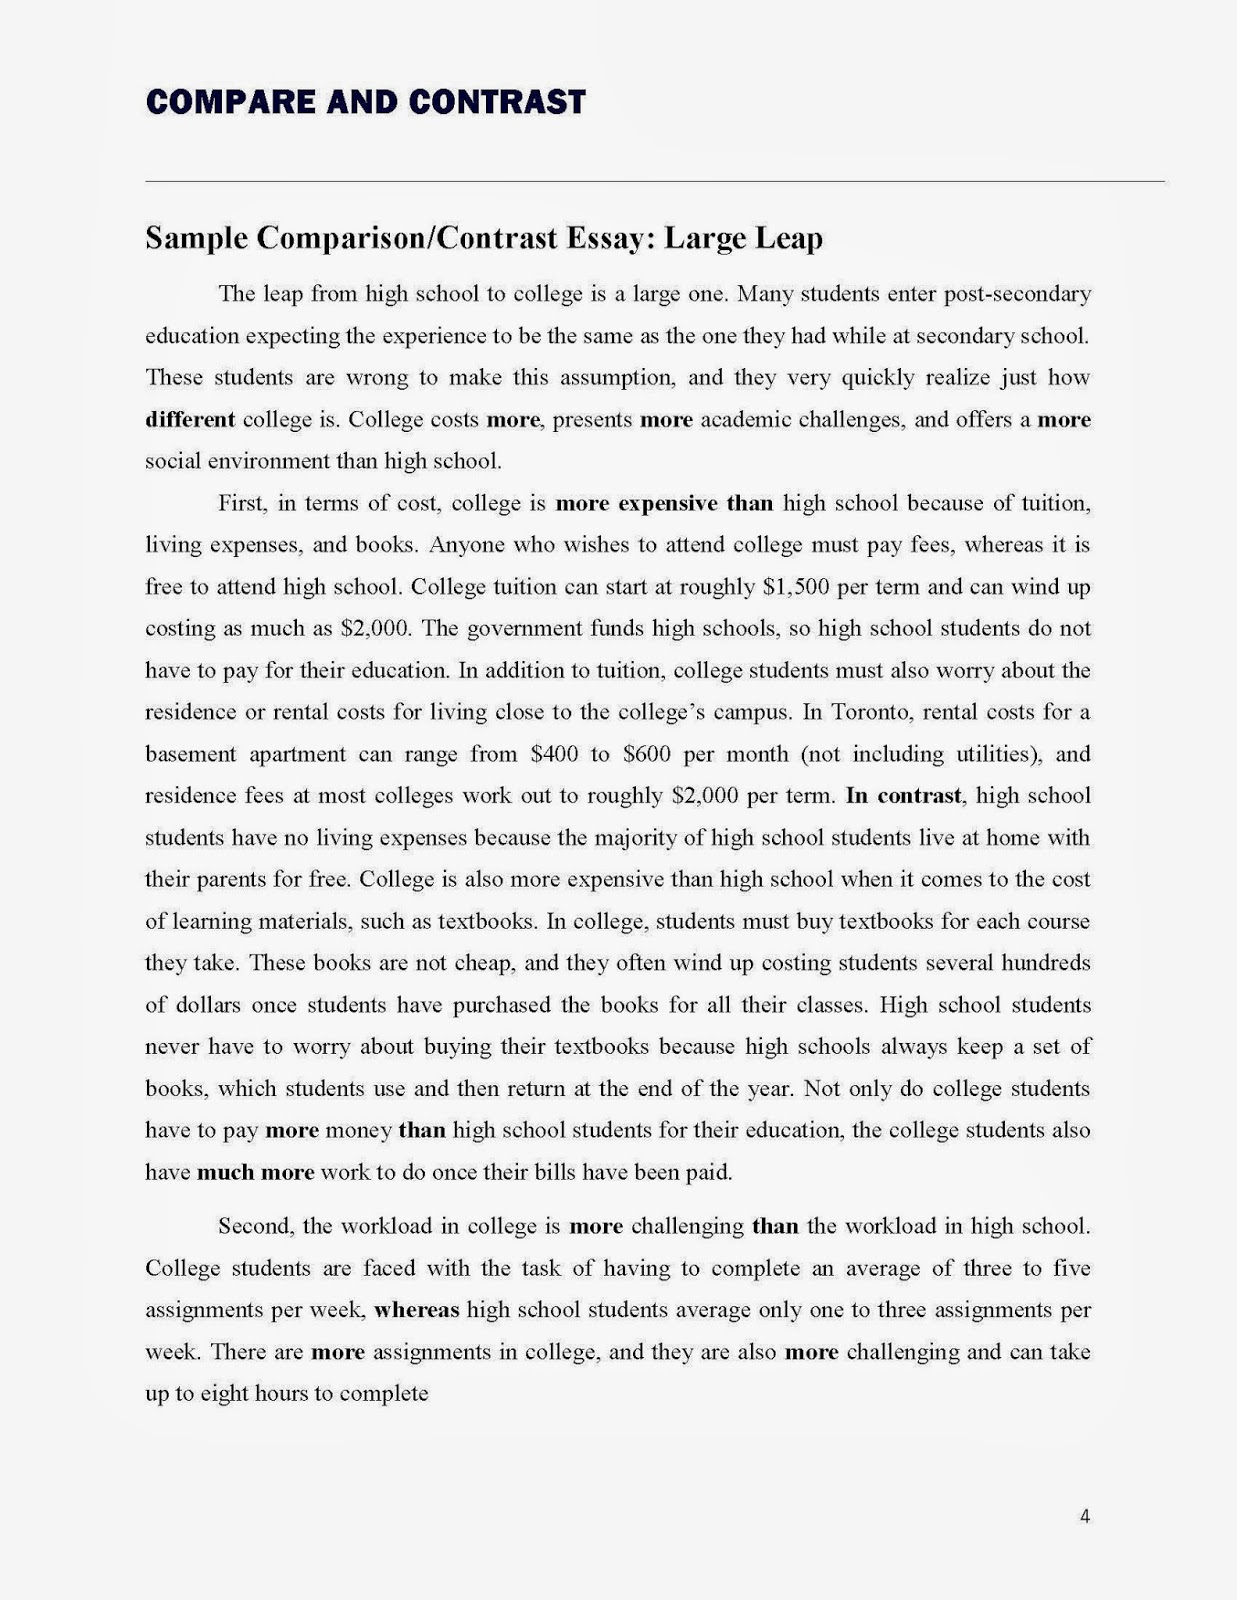 Comparing and contrasting essay topics